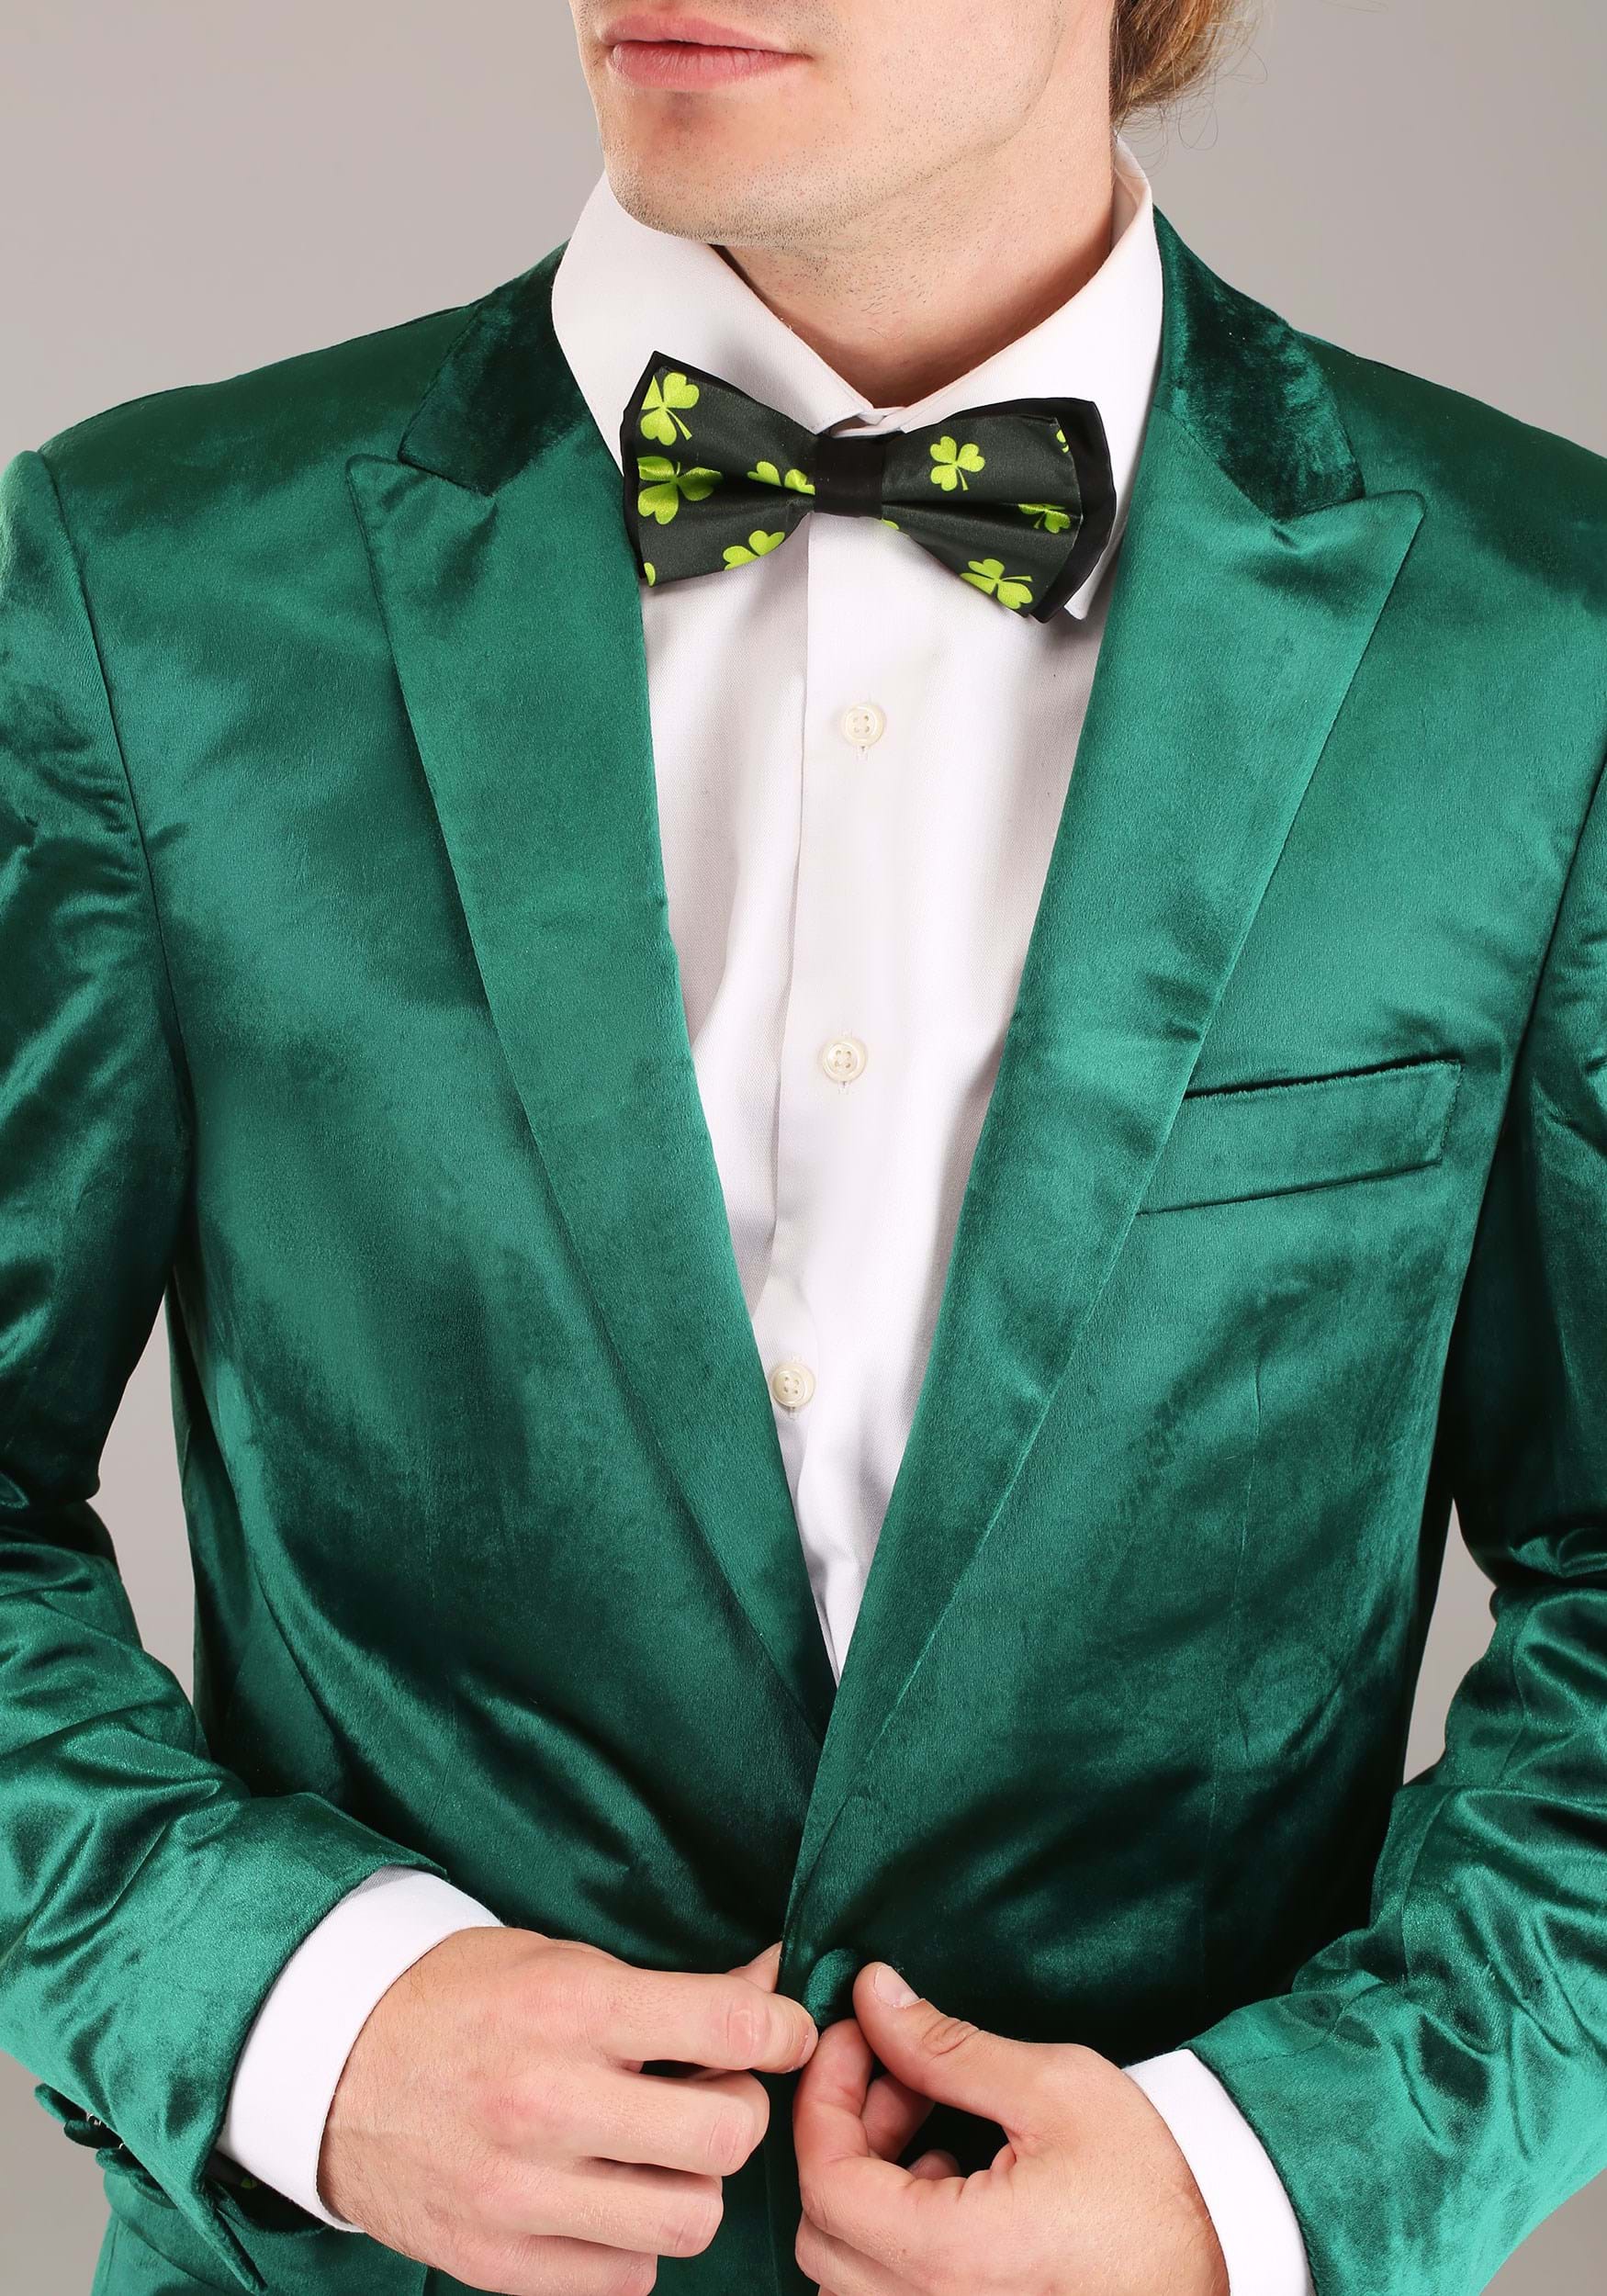 Men's Green Leprechaun Suit Fancy Dress Costume - St. Patrick's Day